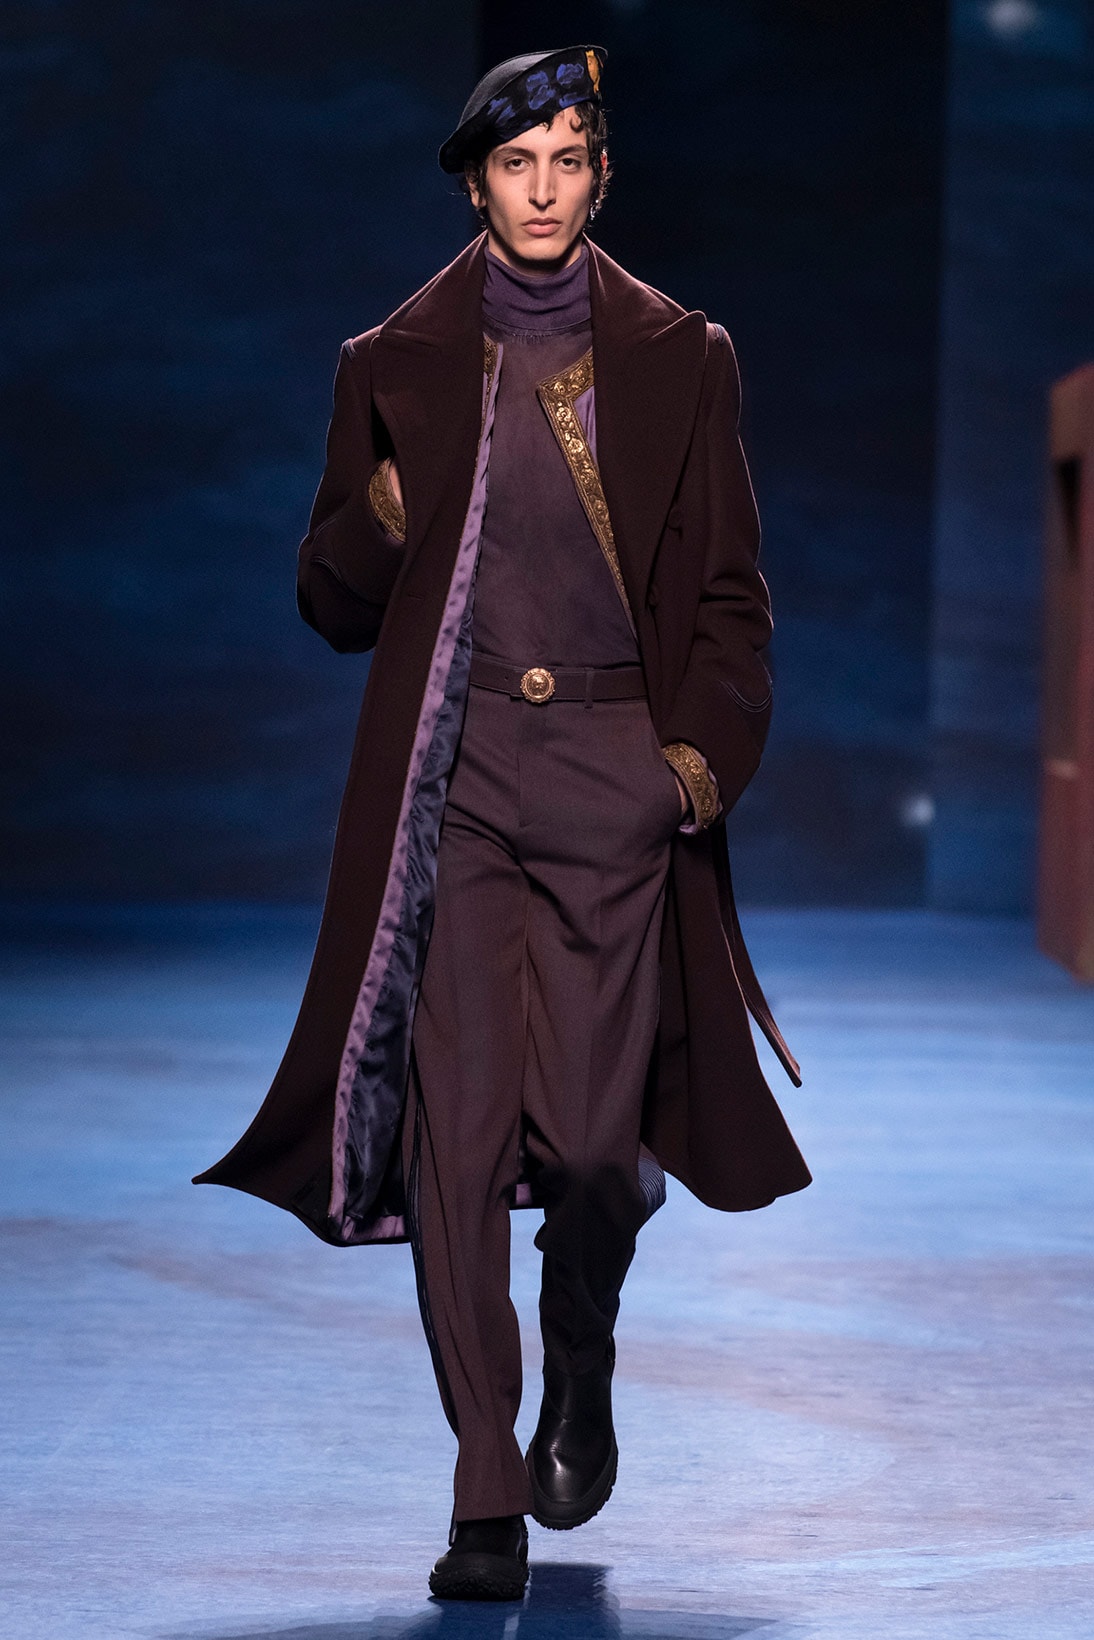 dior mens fall winter collection paris fashion week pfw kim jones runway show jackets coats hats bags pants